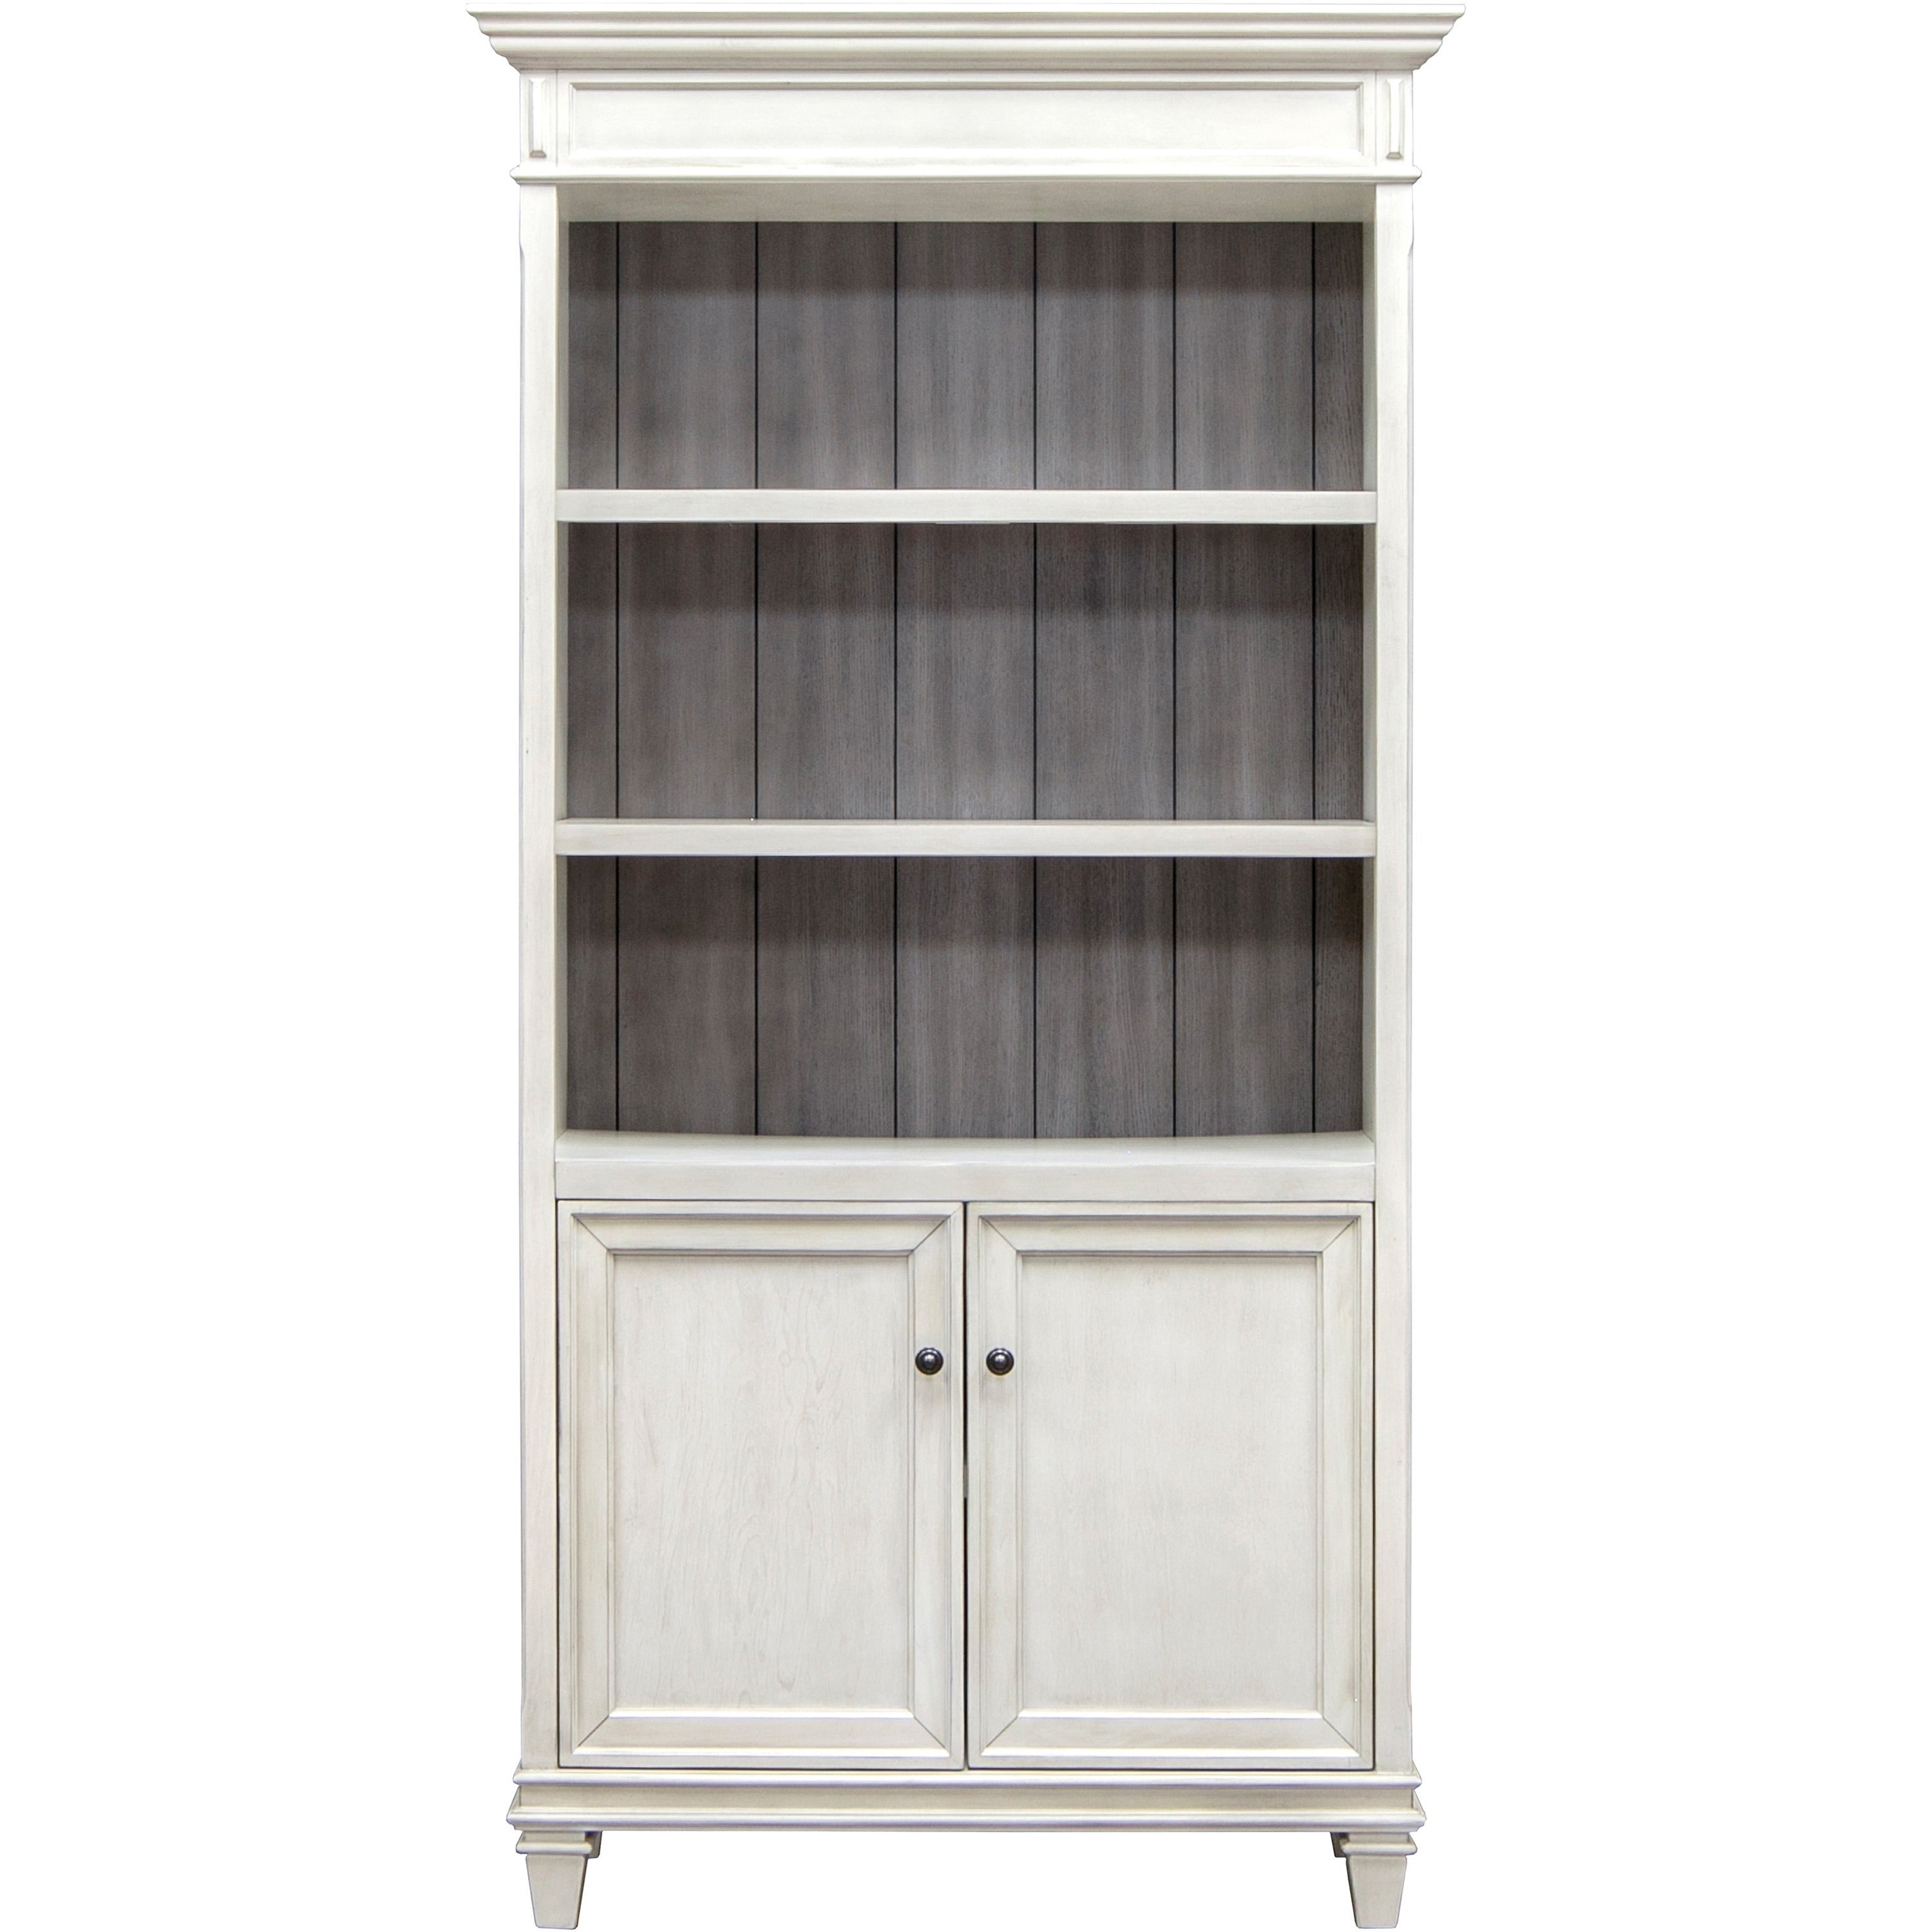 martin-hartford-bookcase-with-lower-doors-40-x-1478-2-doors-5-shelves-3-adjustable-shelfves-material-natural-wood-finish-vintage-linen_mrtimhf4078dw - 1